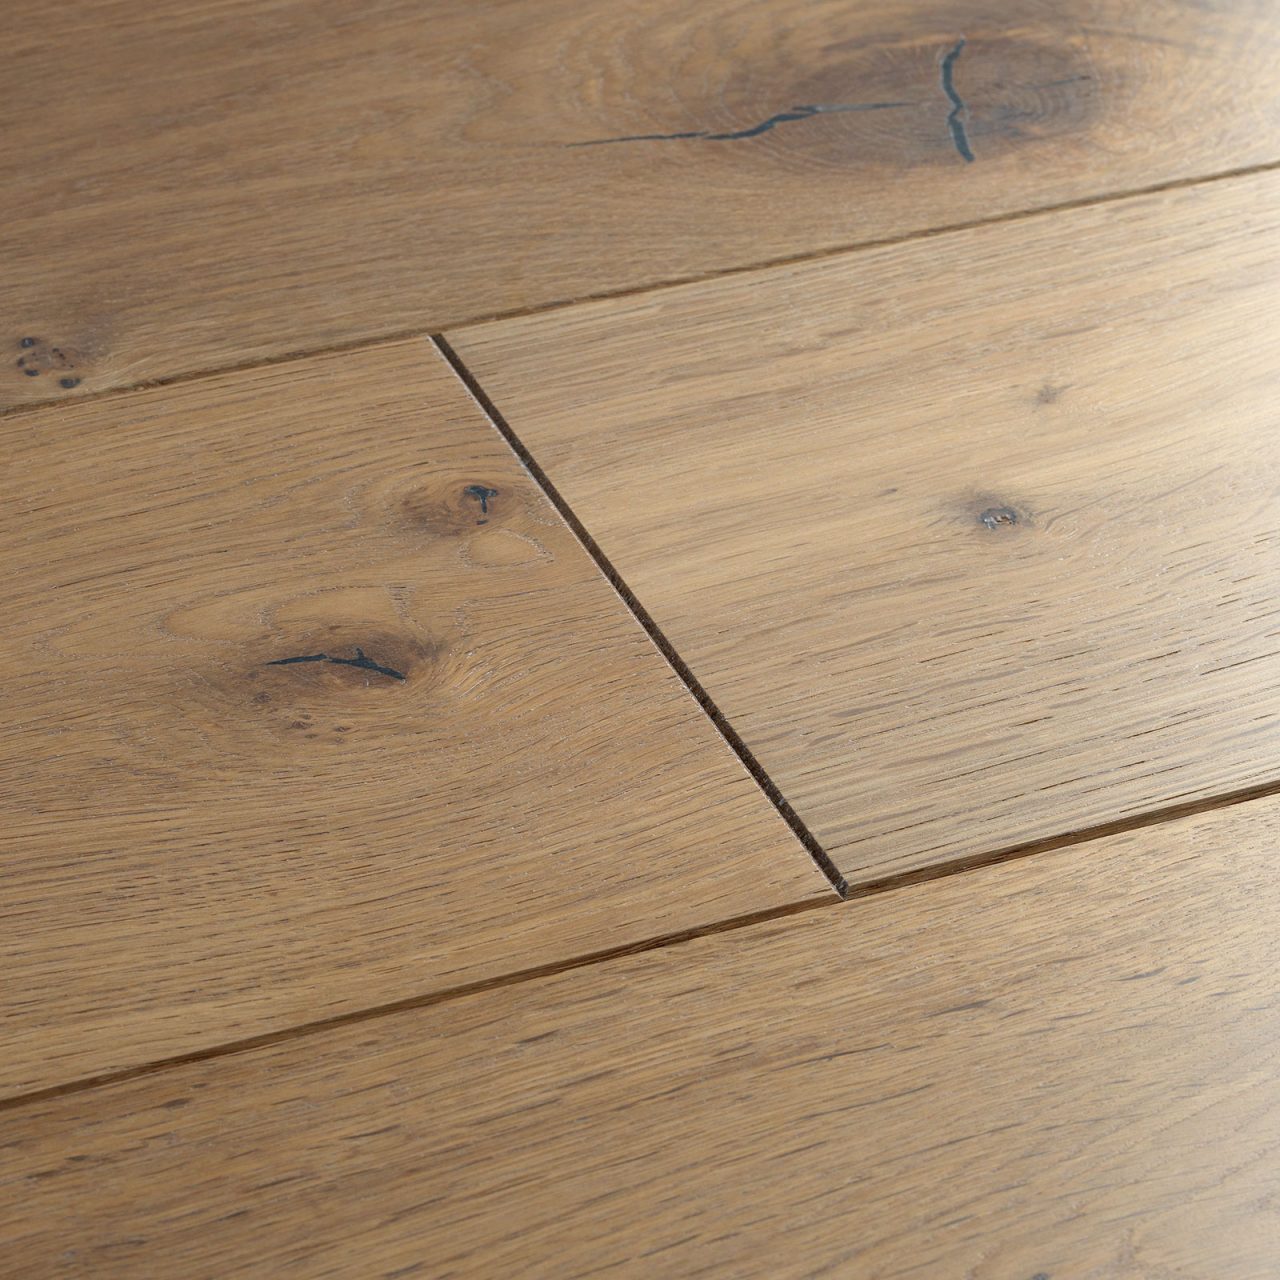 planed washed oak flooring swatch